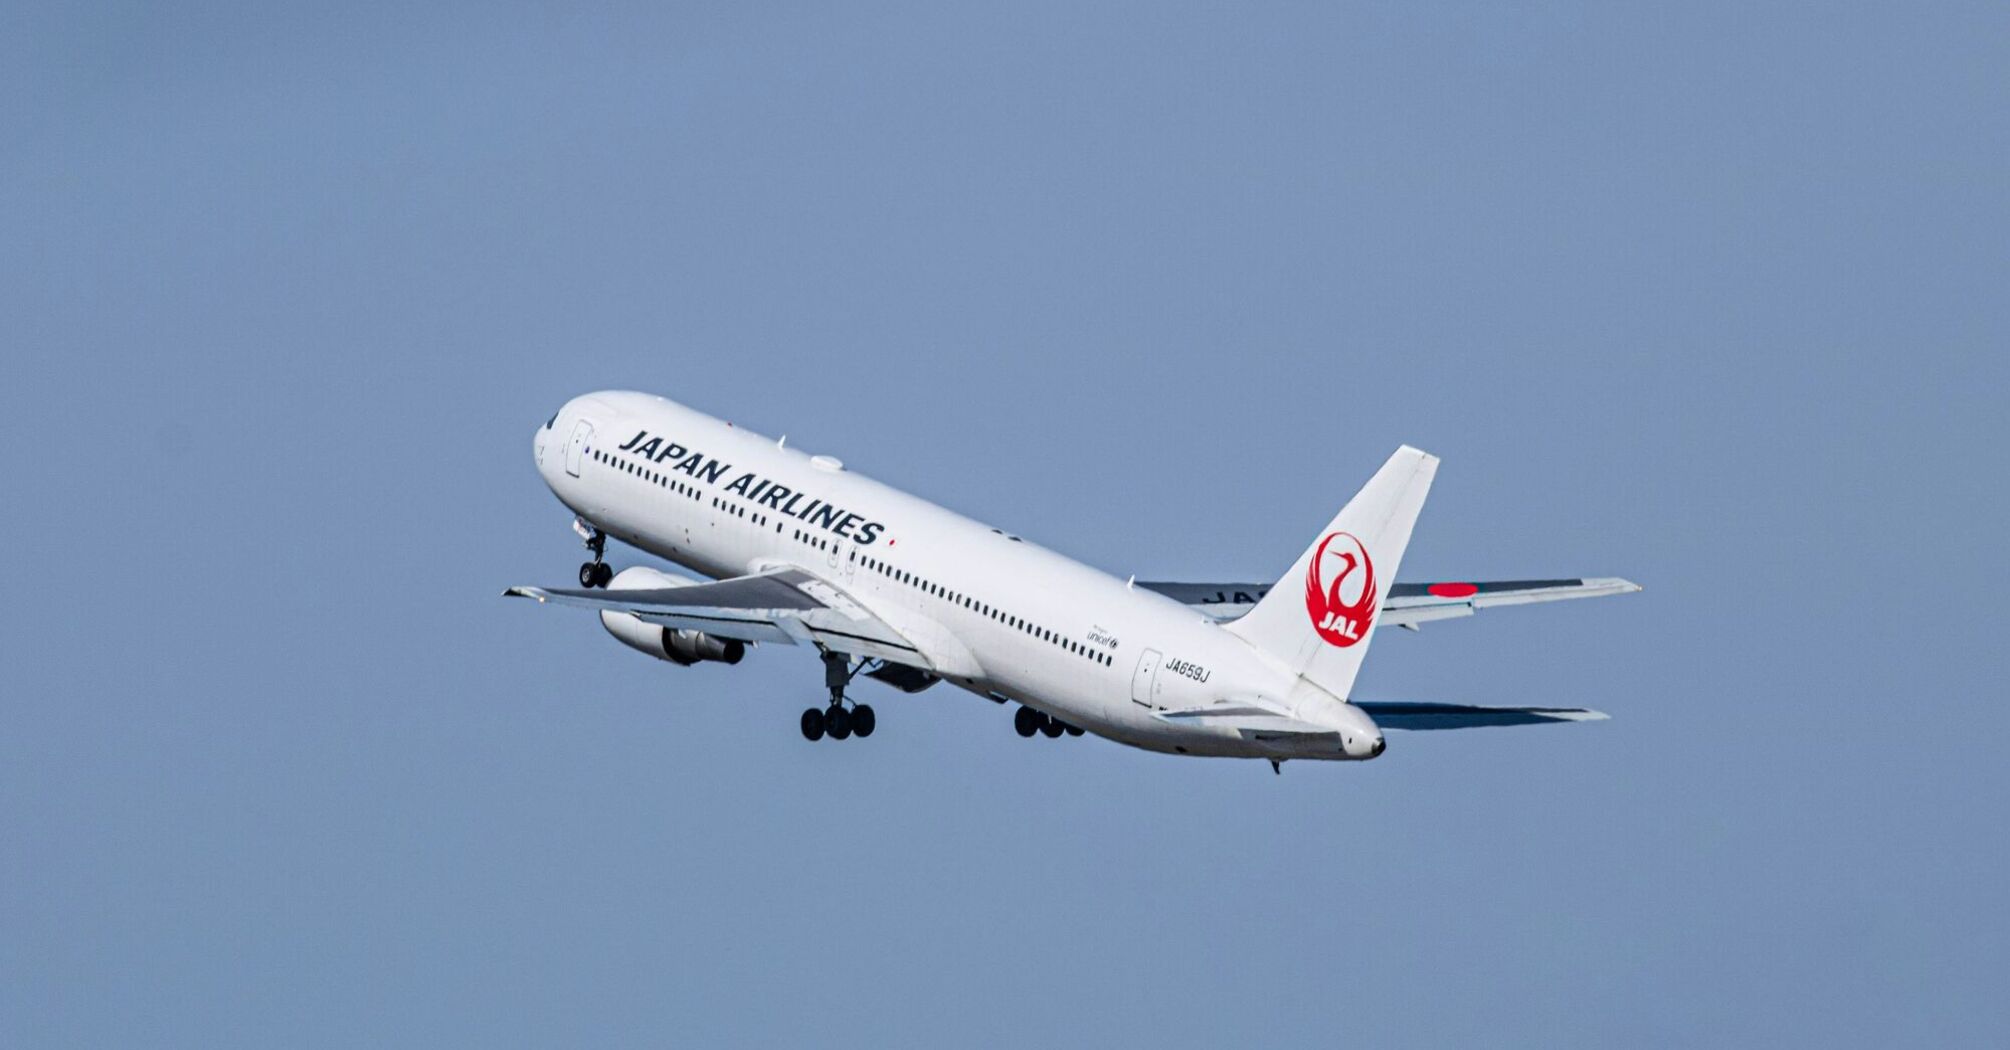 A large japan airlines jetliner flying through a blue sky